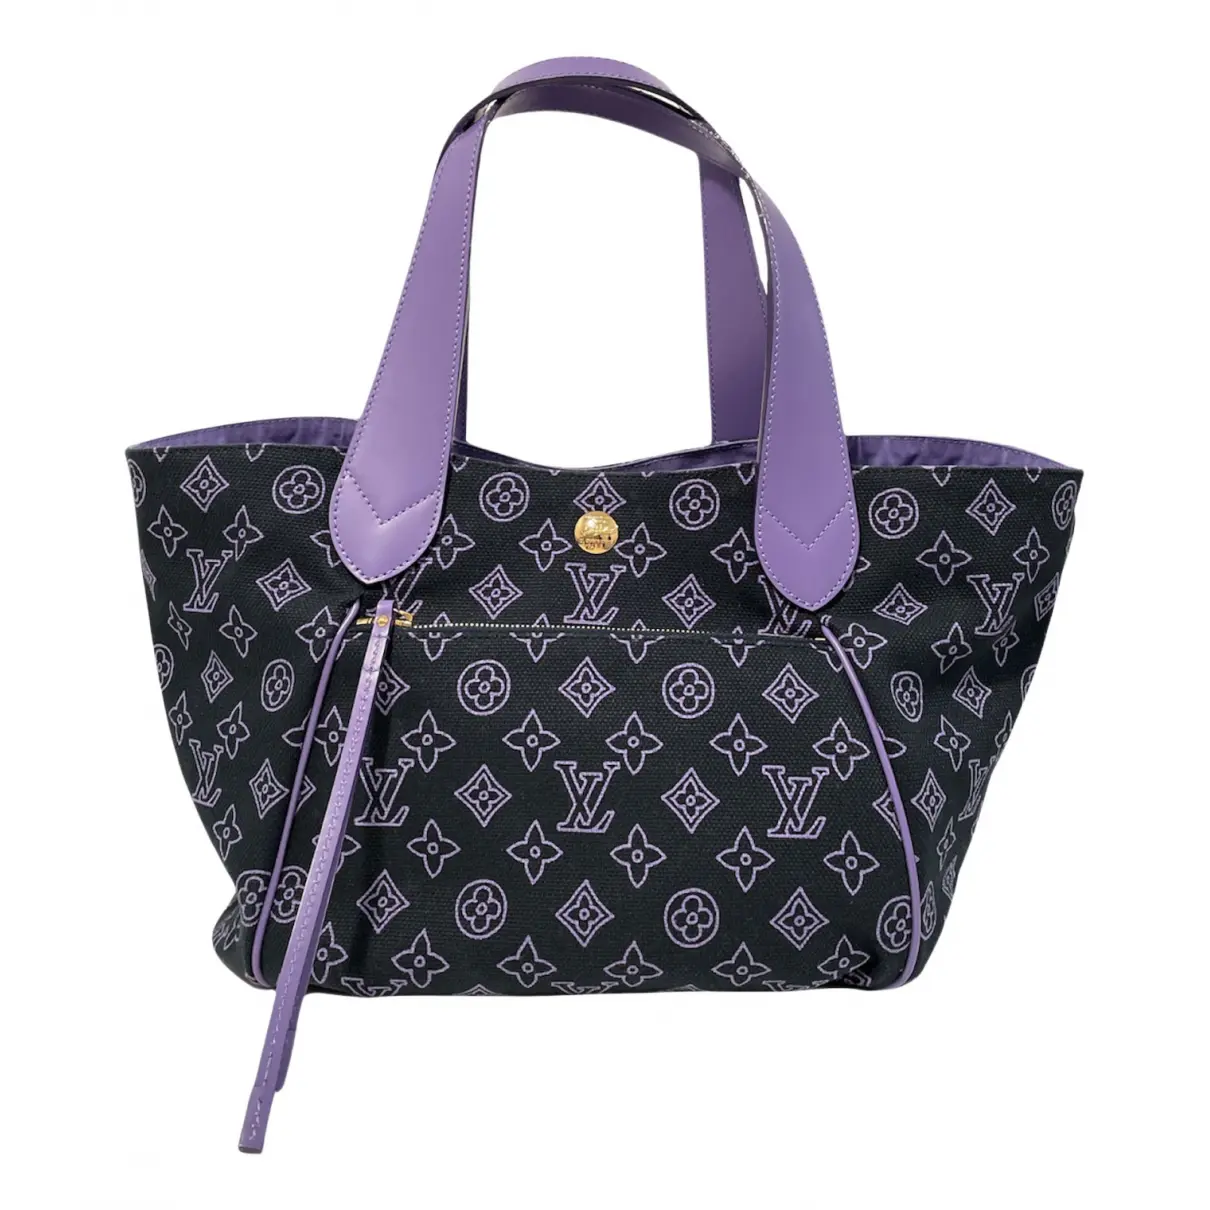 Ipanema cloth handbag Louis Vuitton